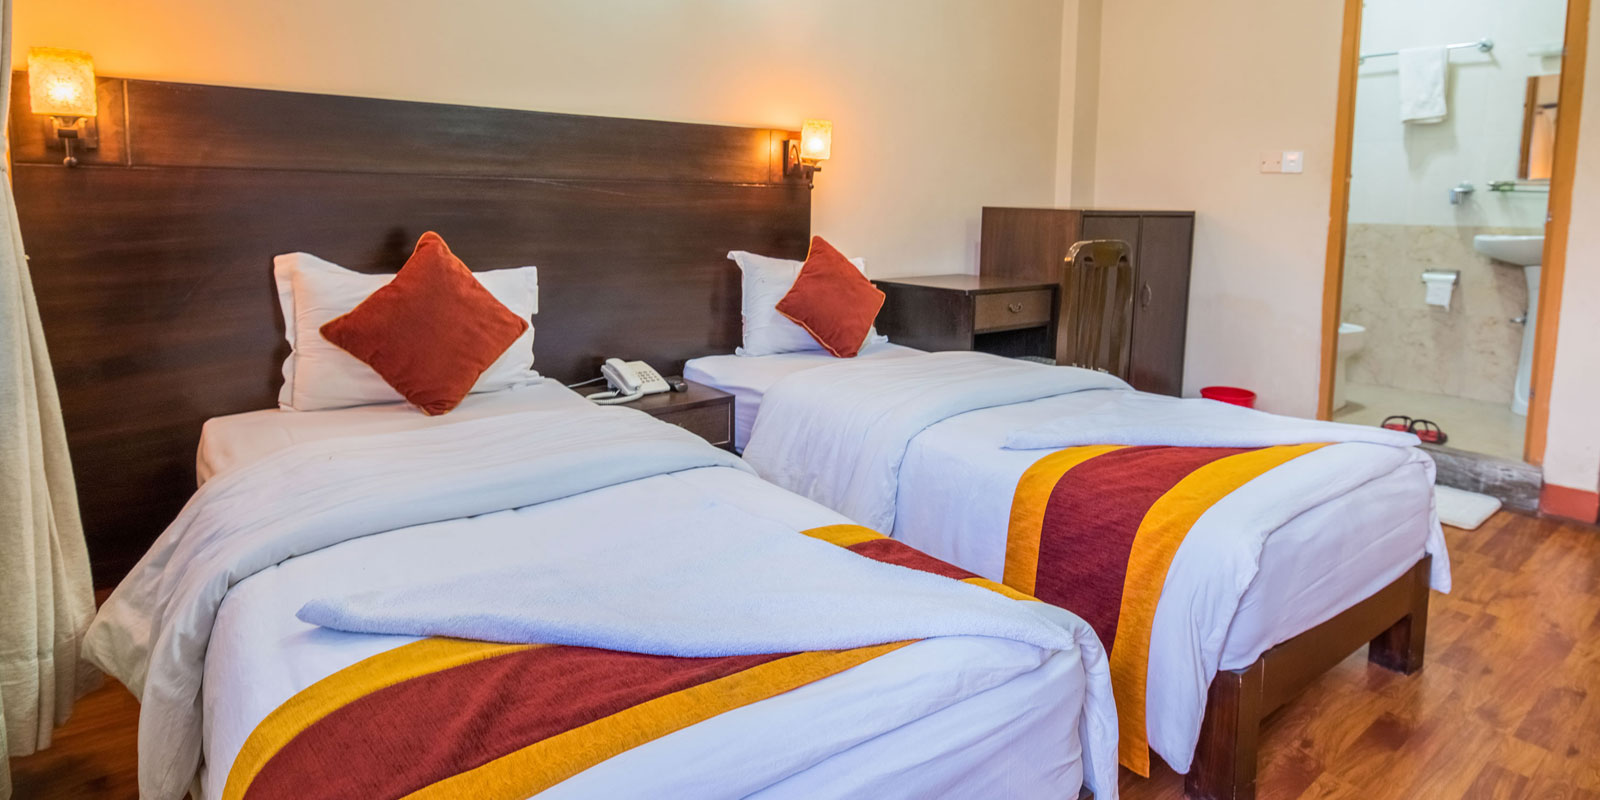 Accommodation in Kathmandu - Kathmandu Sunny Hotel